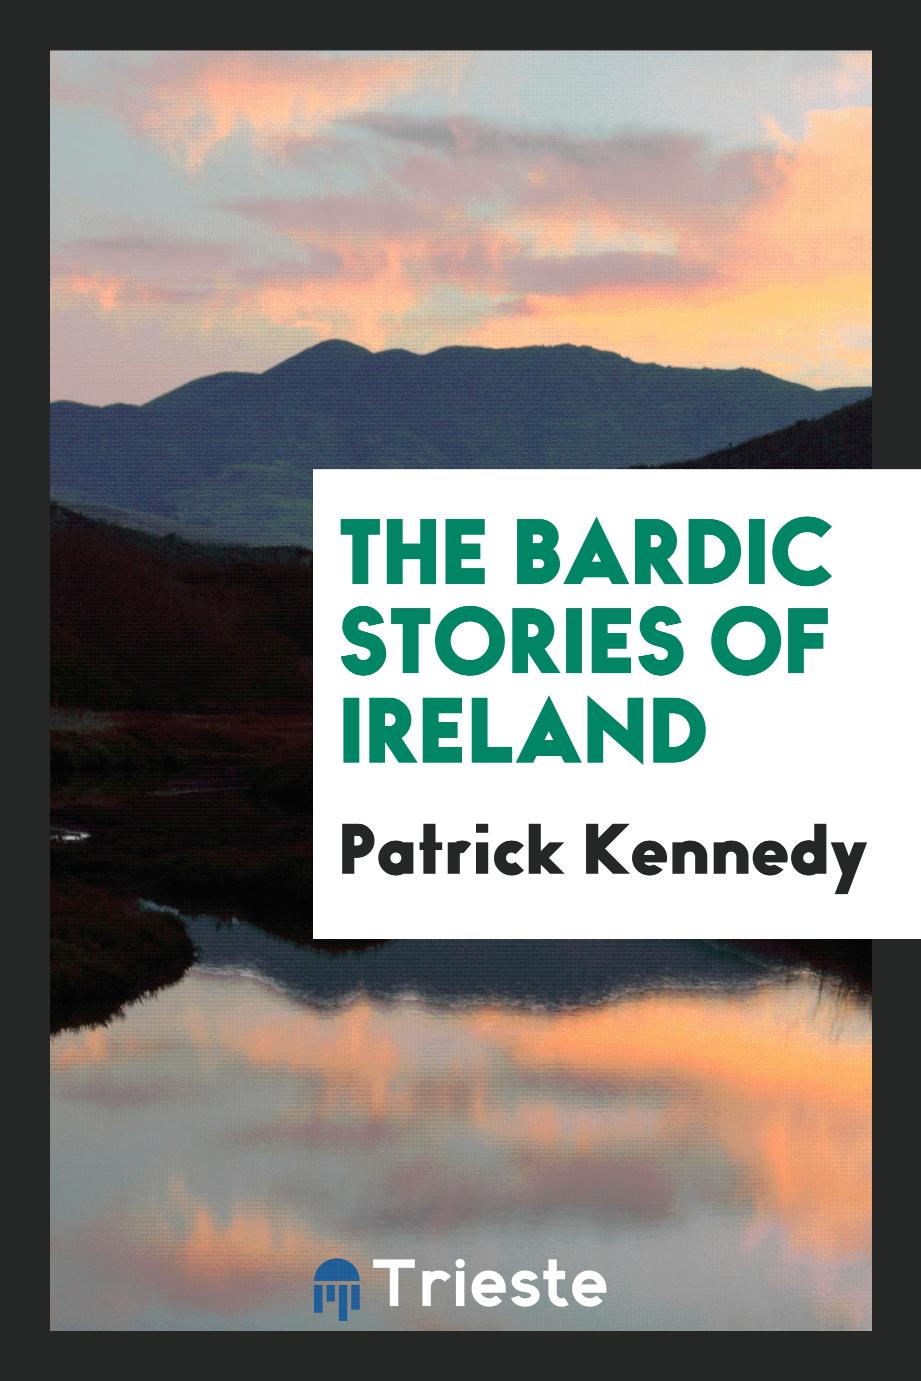 The bardic stories of Ireland